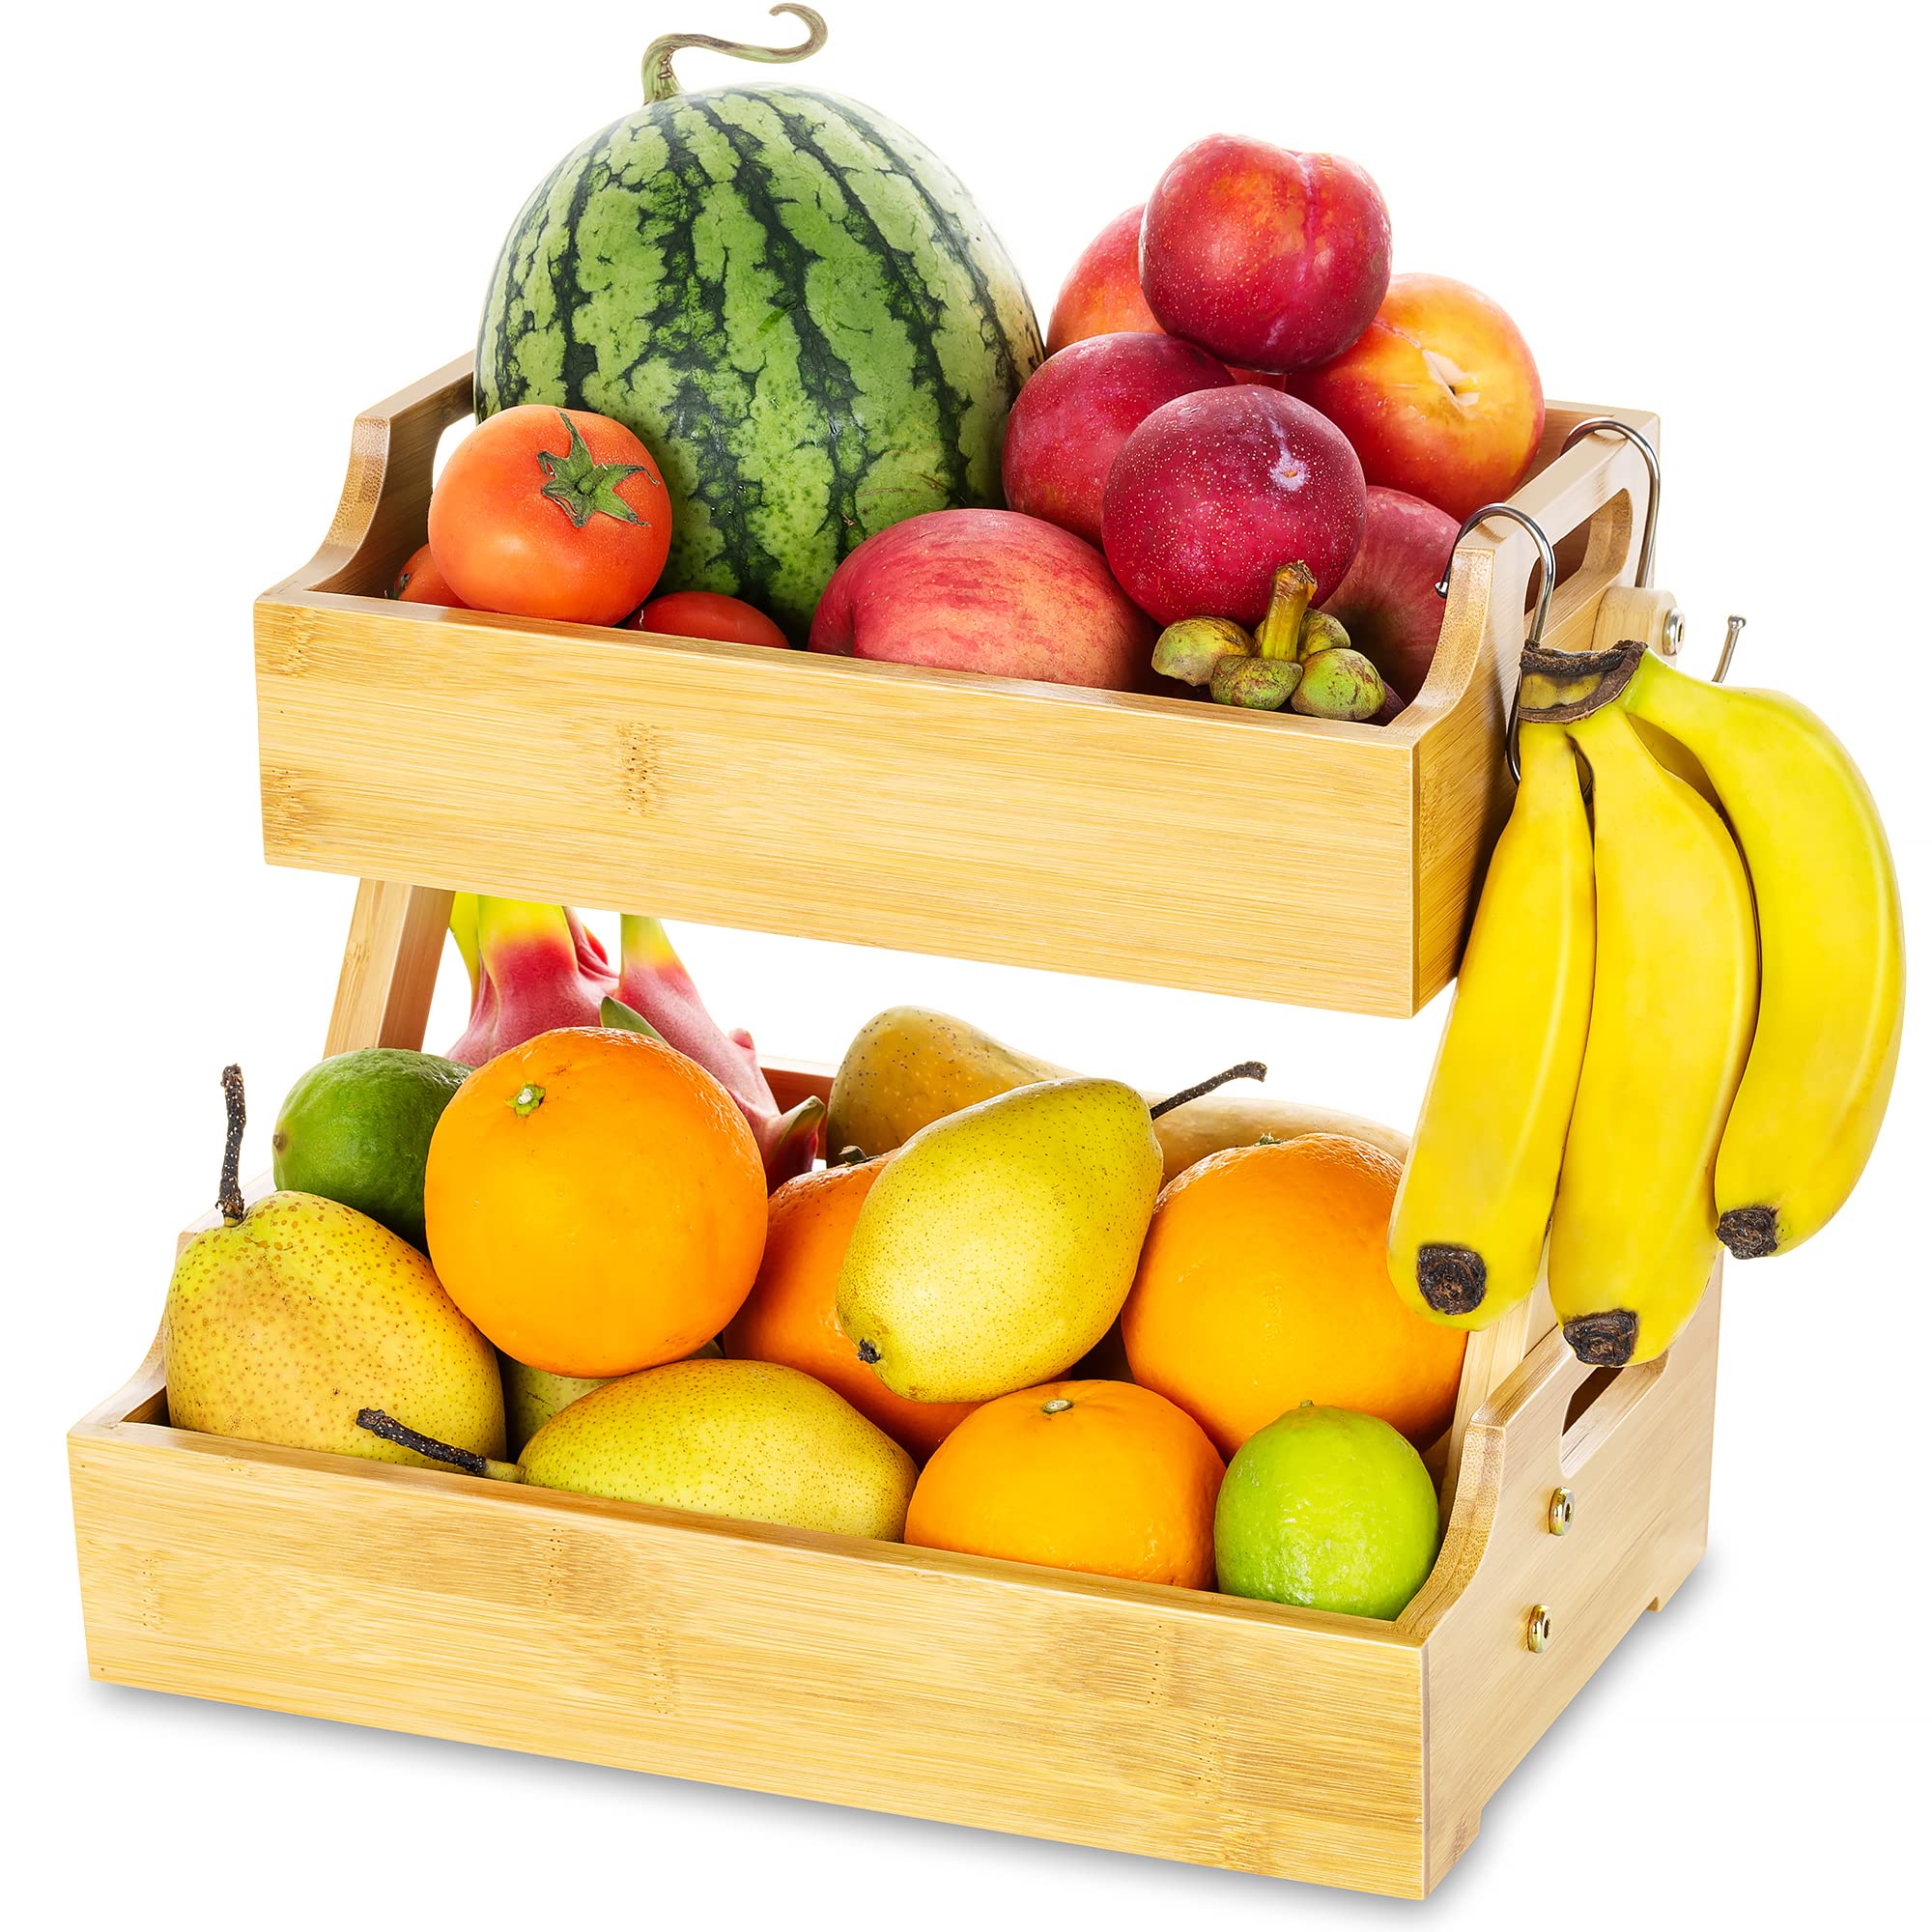 Shangrun Large Capacity Detachable Fruit Holder for Kitchen Counter